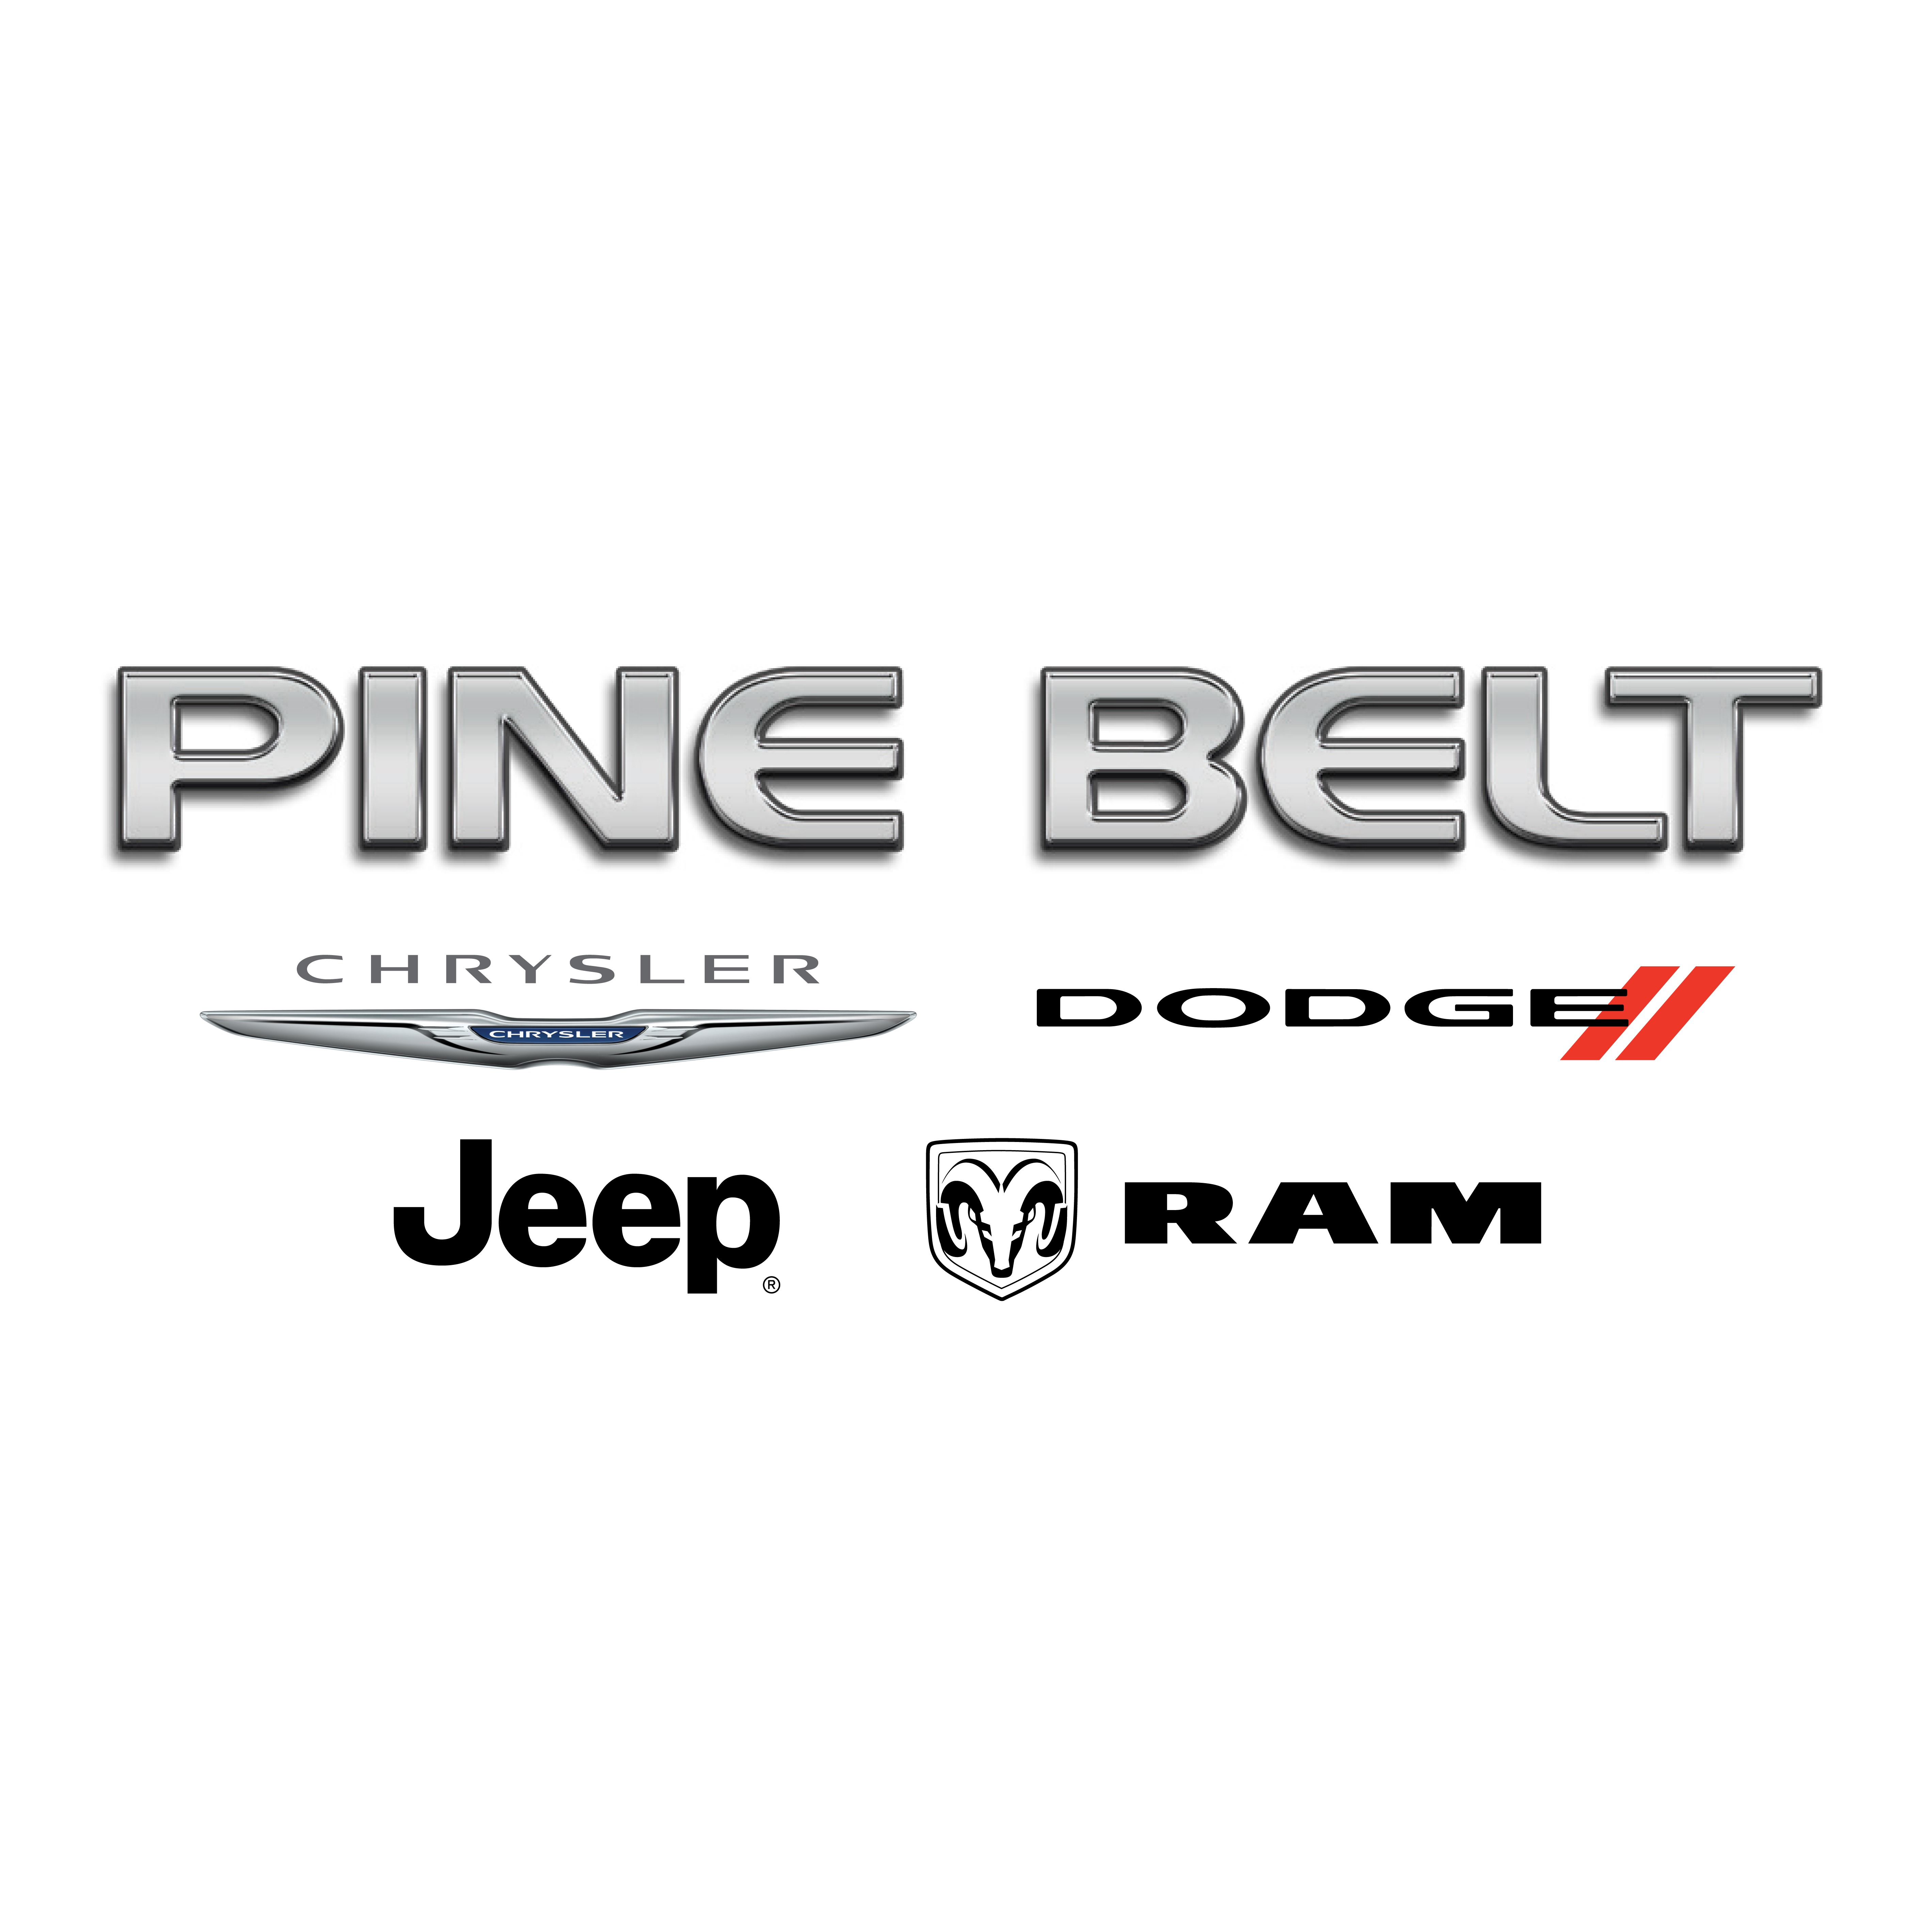 Pine Belt Chrysler Dodge Jeep Ram Logo